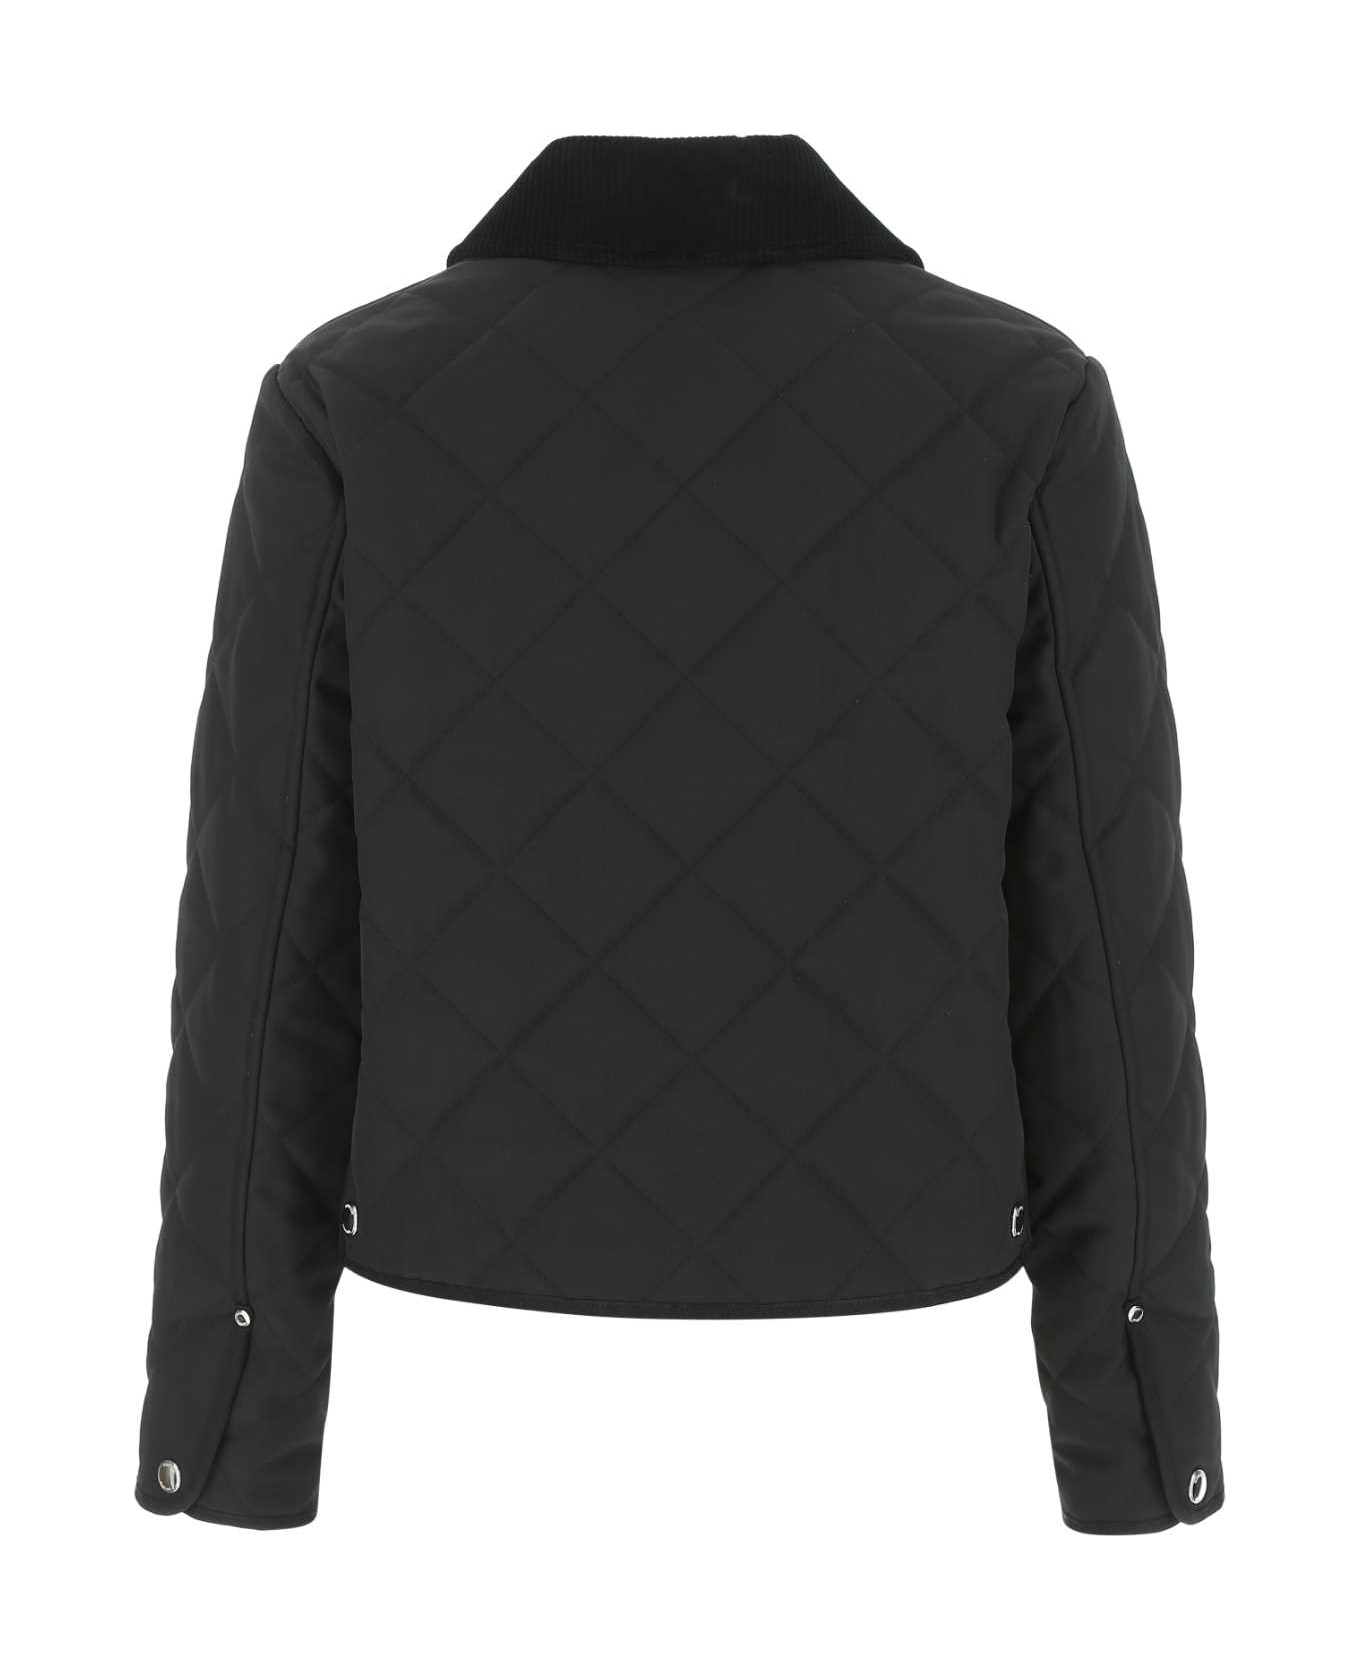 Burberry Black Polyester Jacket - A1189